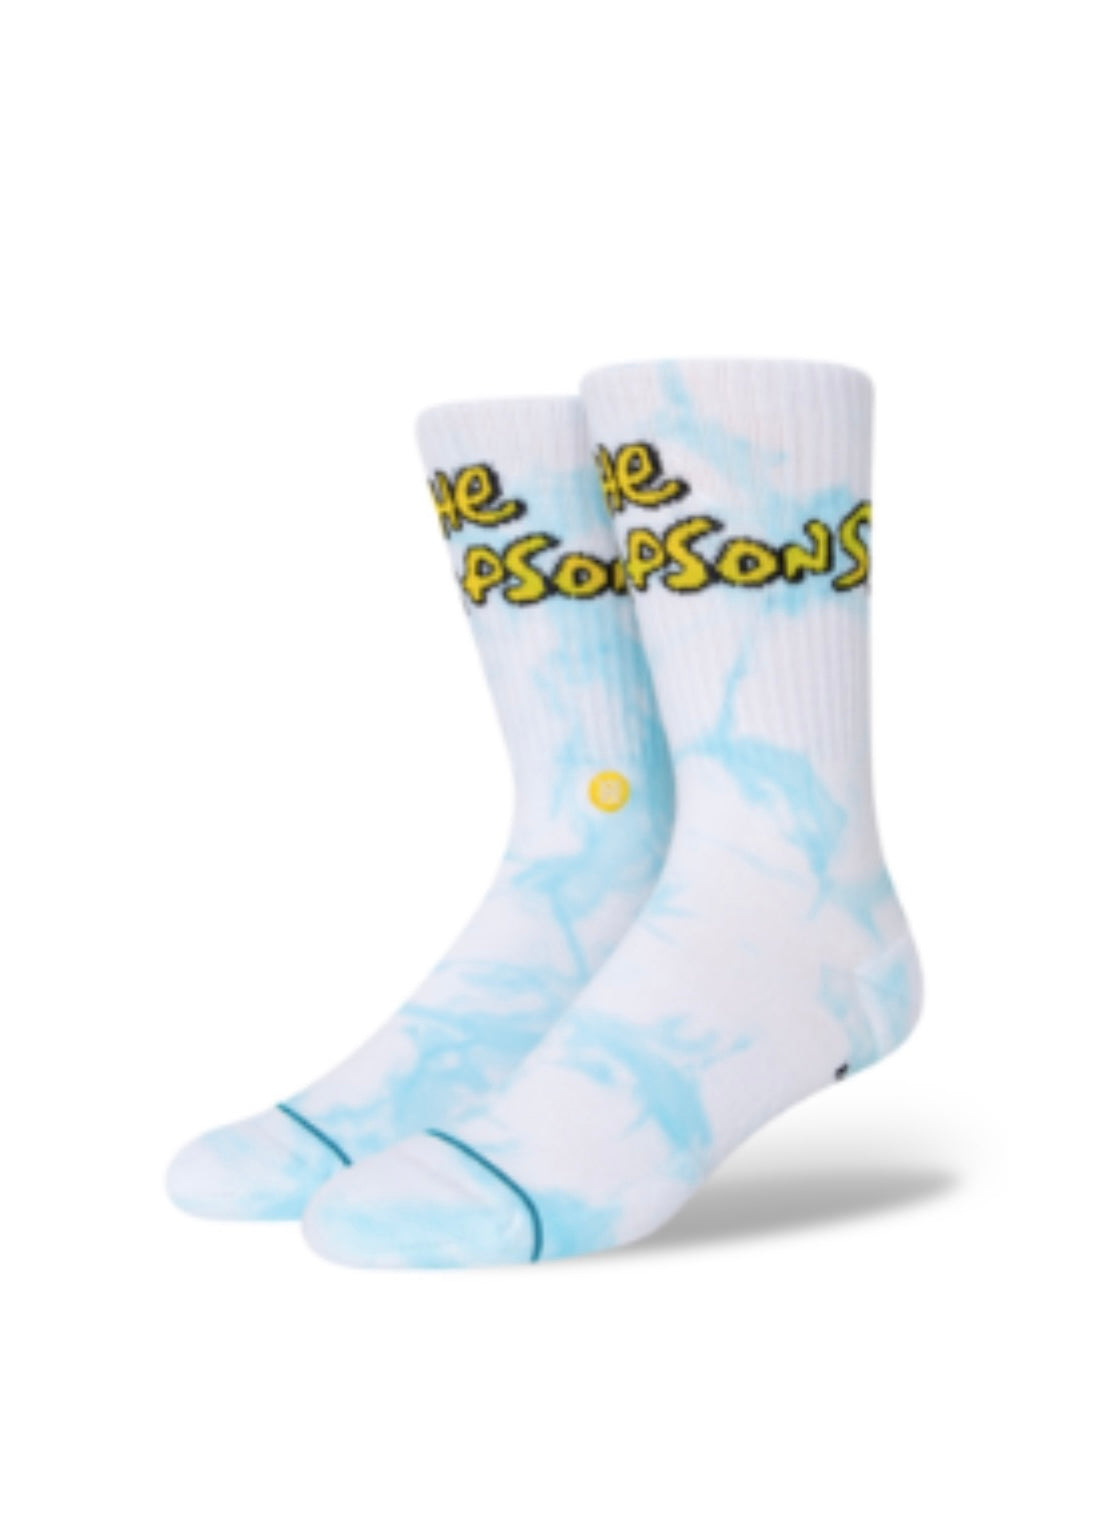 The Simpsons White Socks